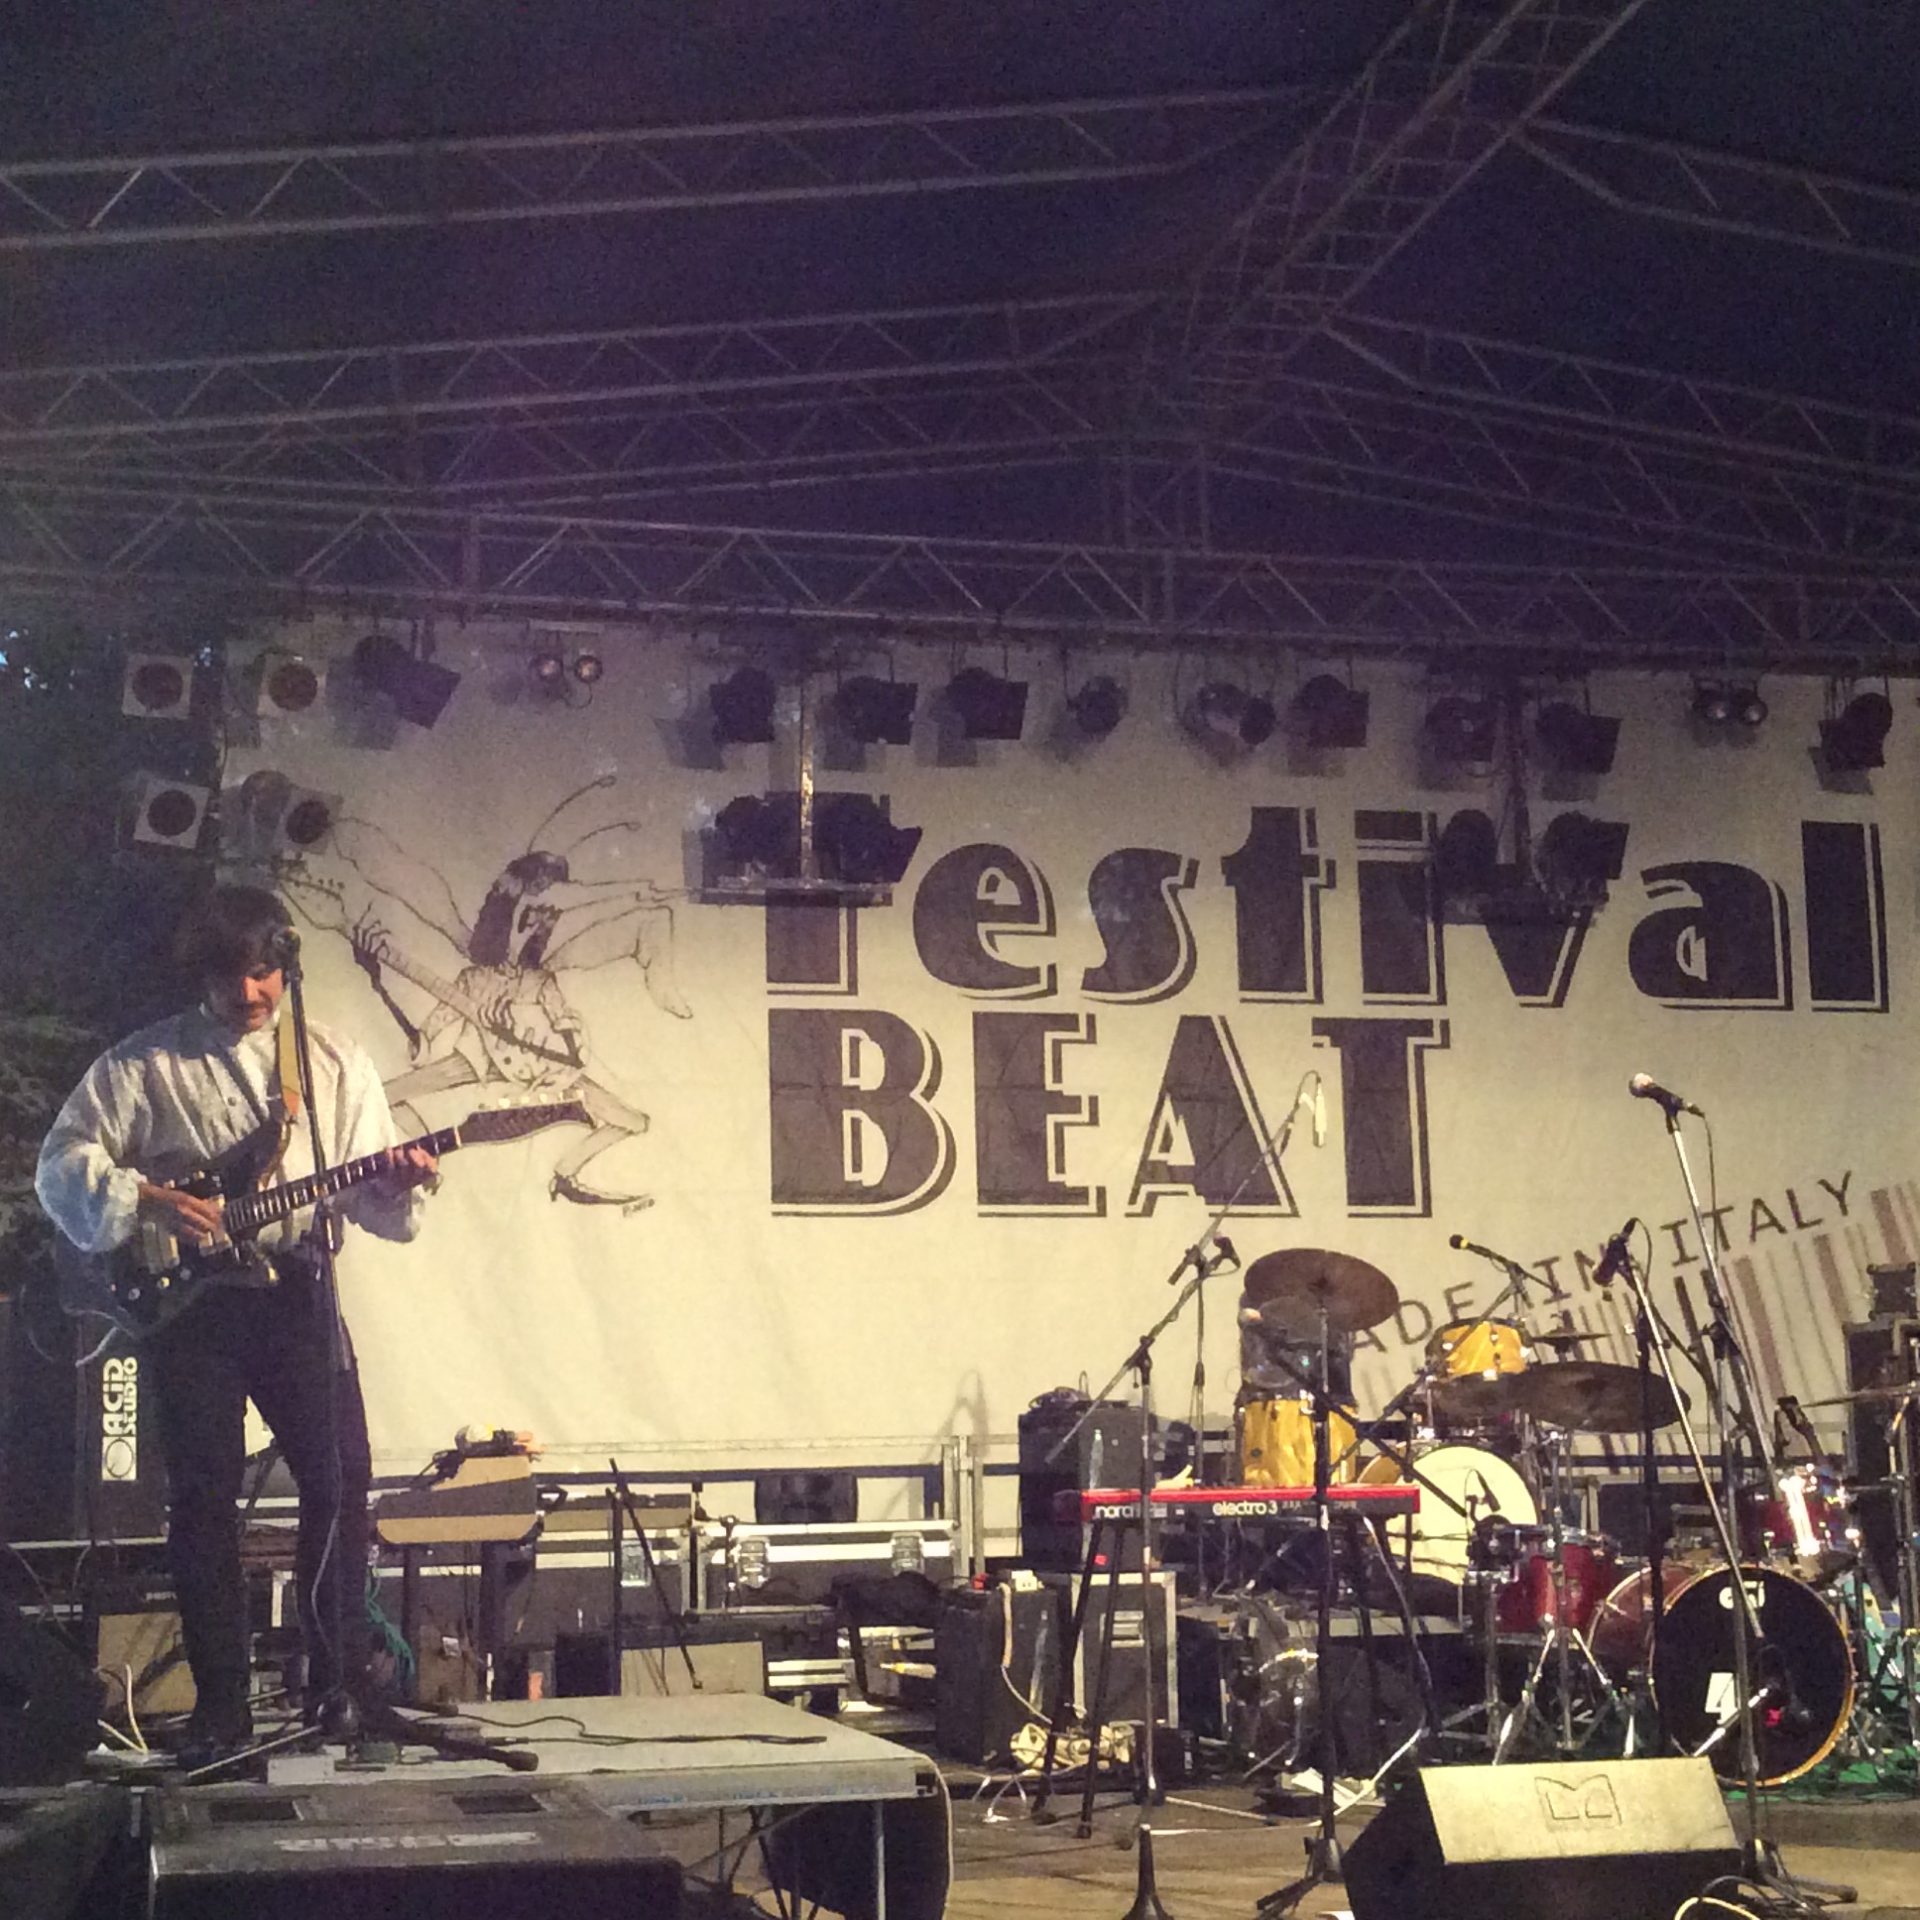 Beat festival